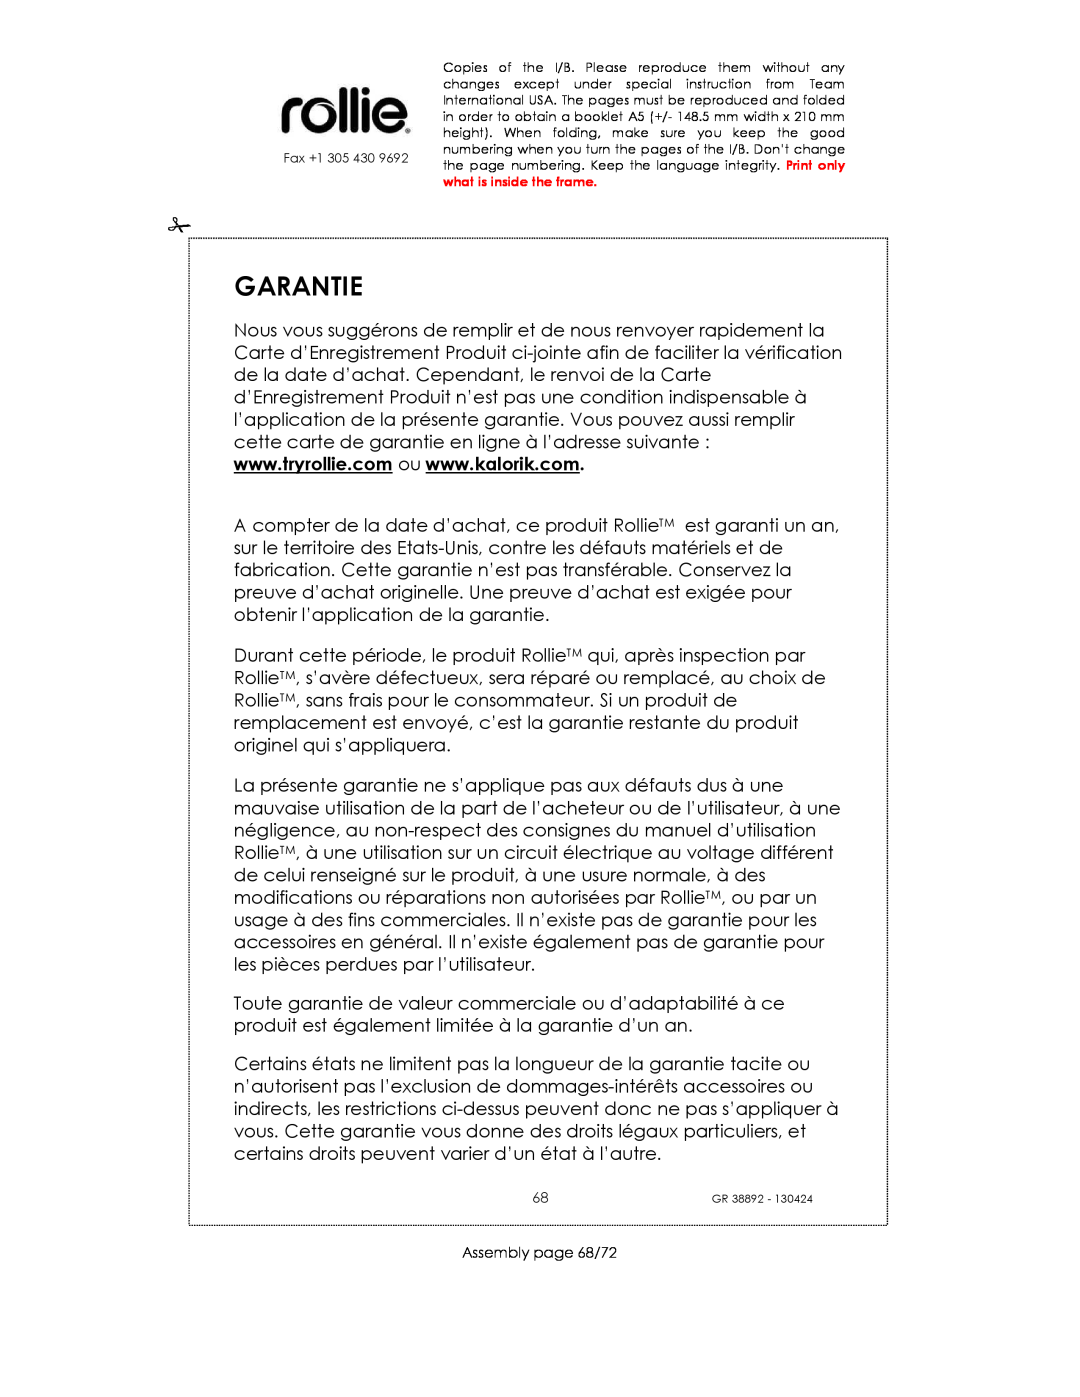 Kalorik GR38892 manual Garantie, Assembly page 68/72 